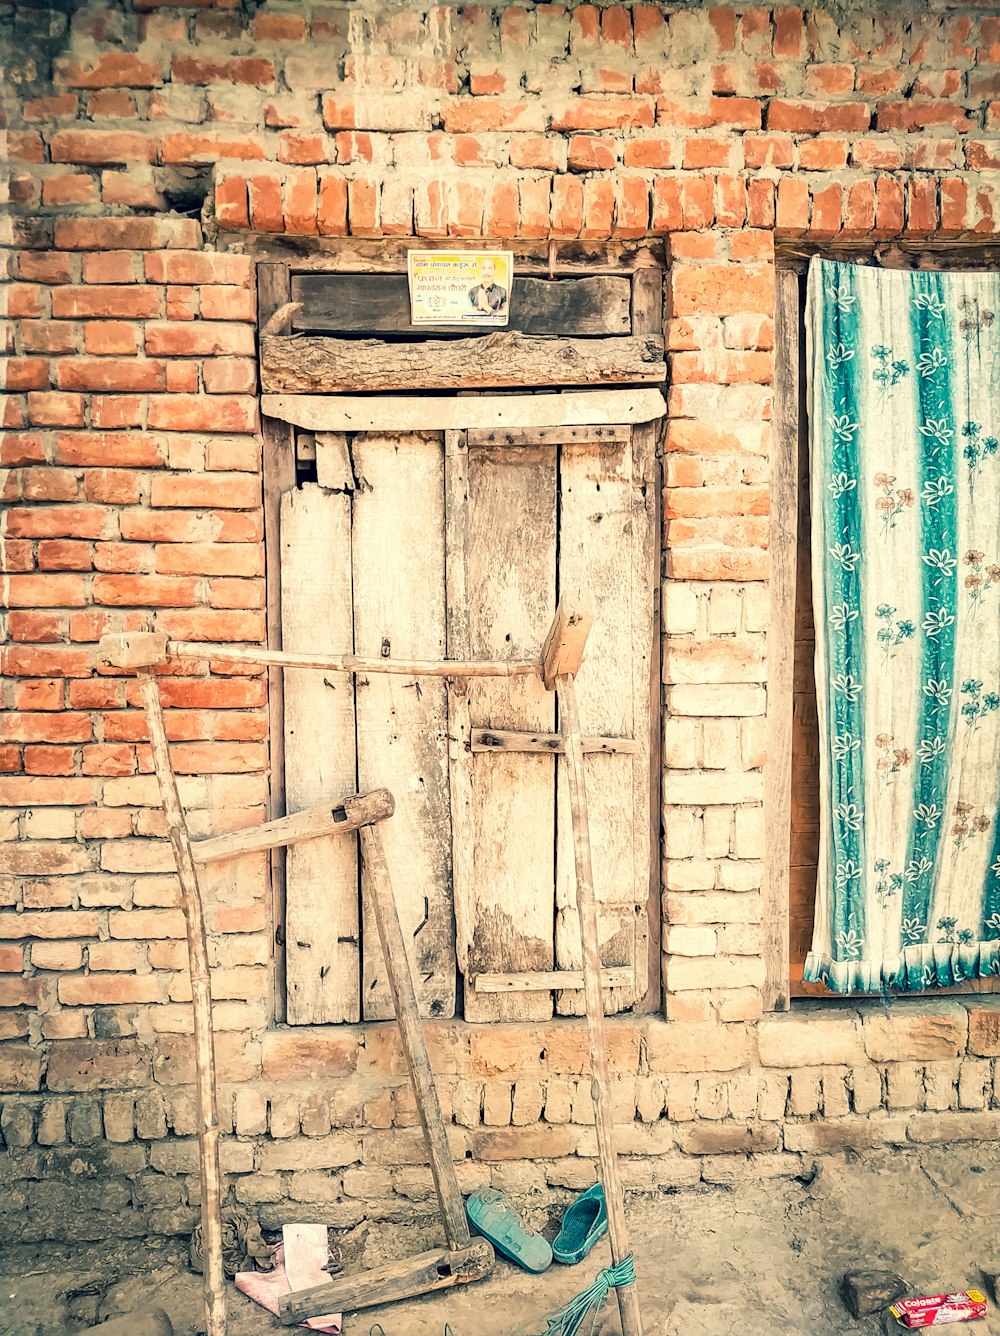 a wooden door in a brick wall